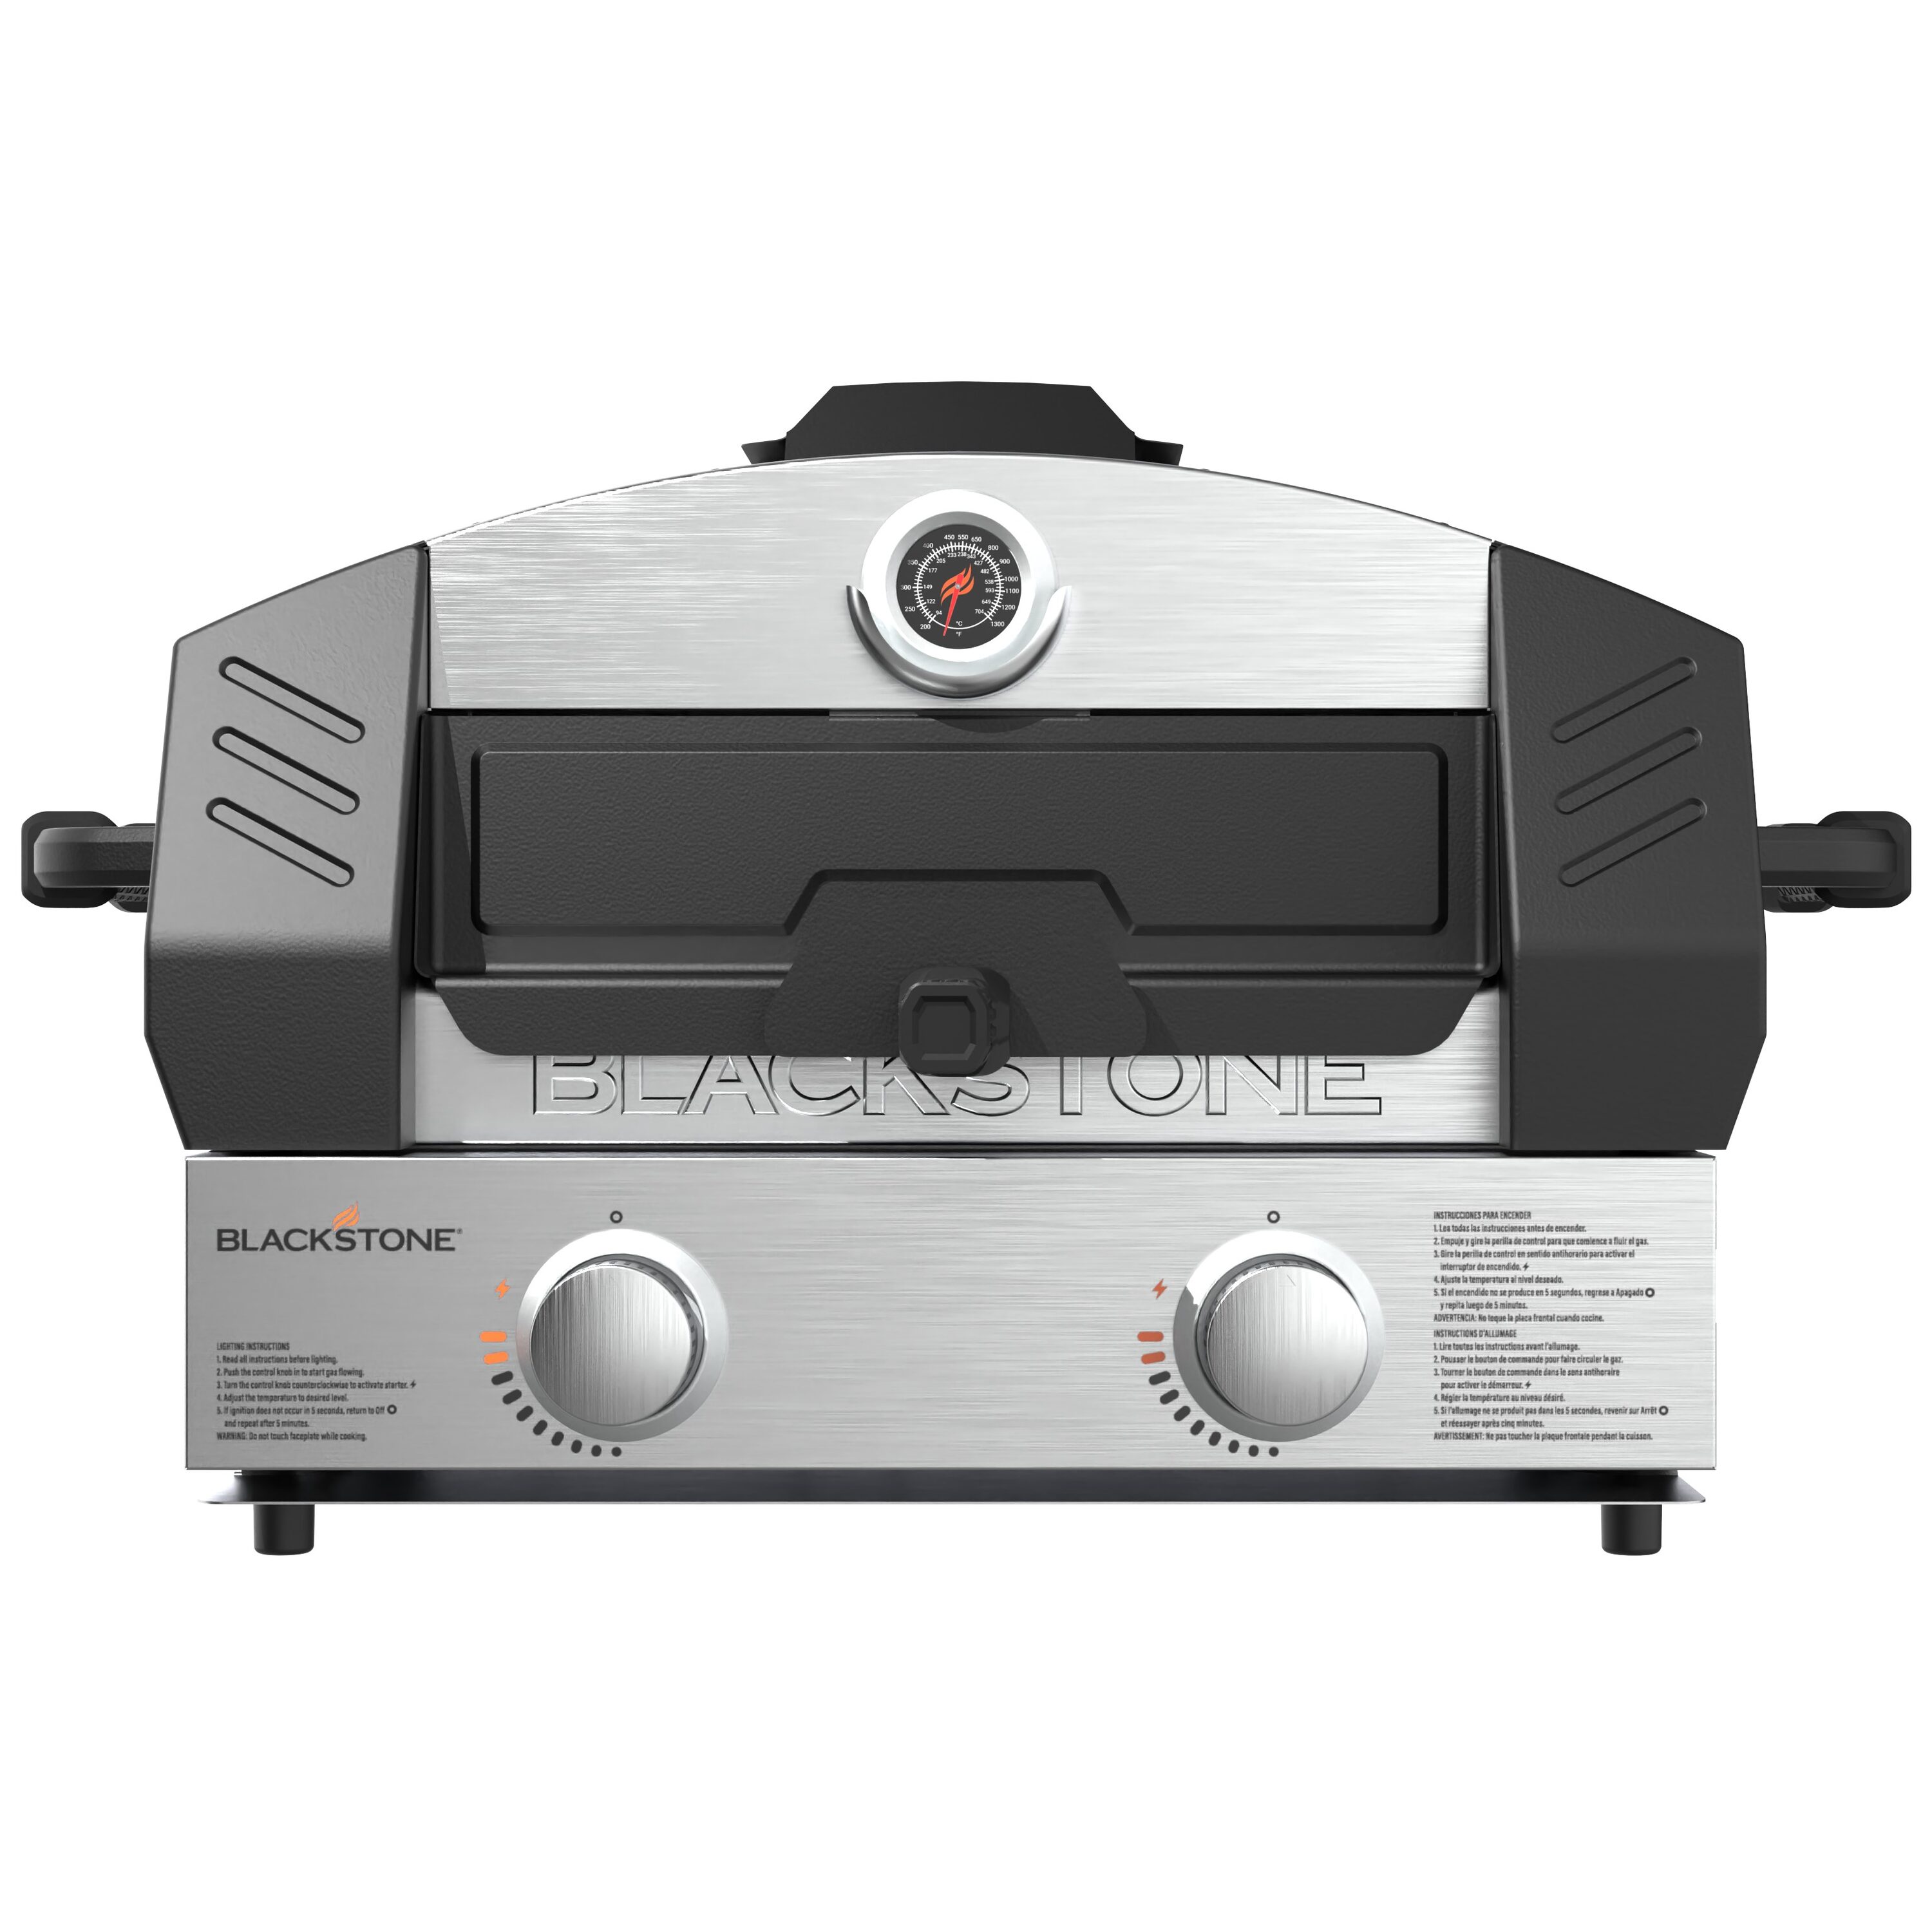 22 Pizza Oven Conversion Kit – Blackstone Products